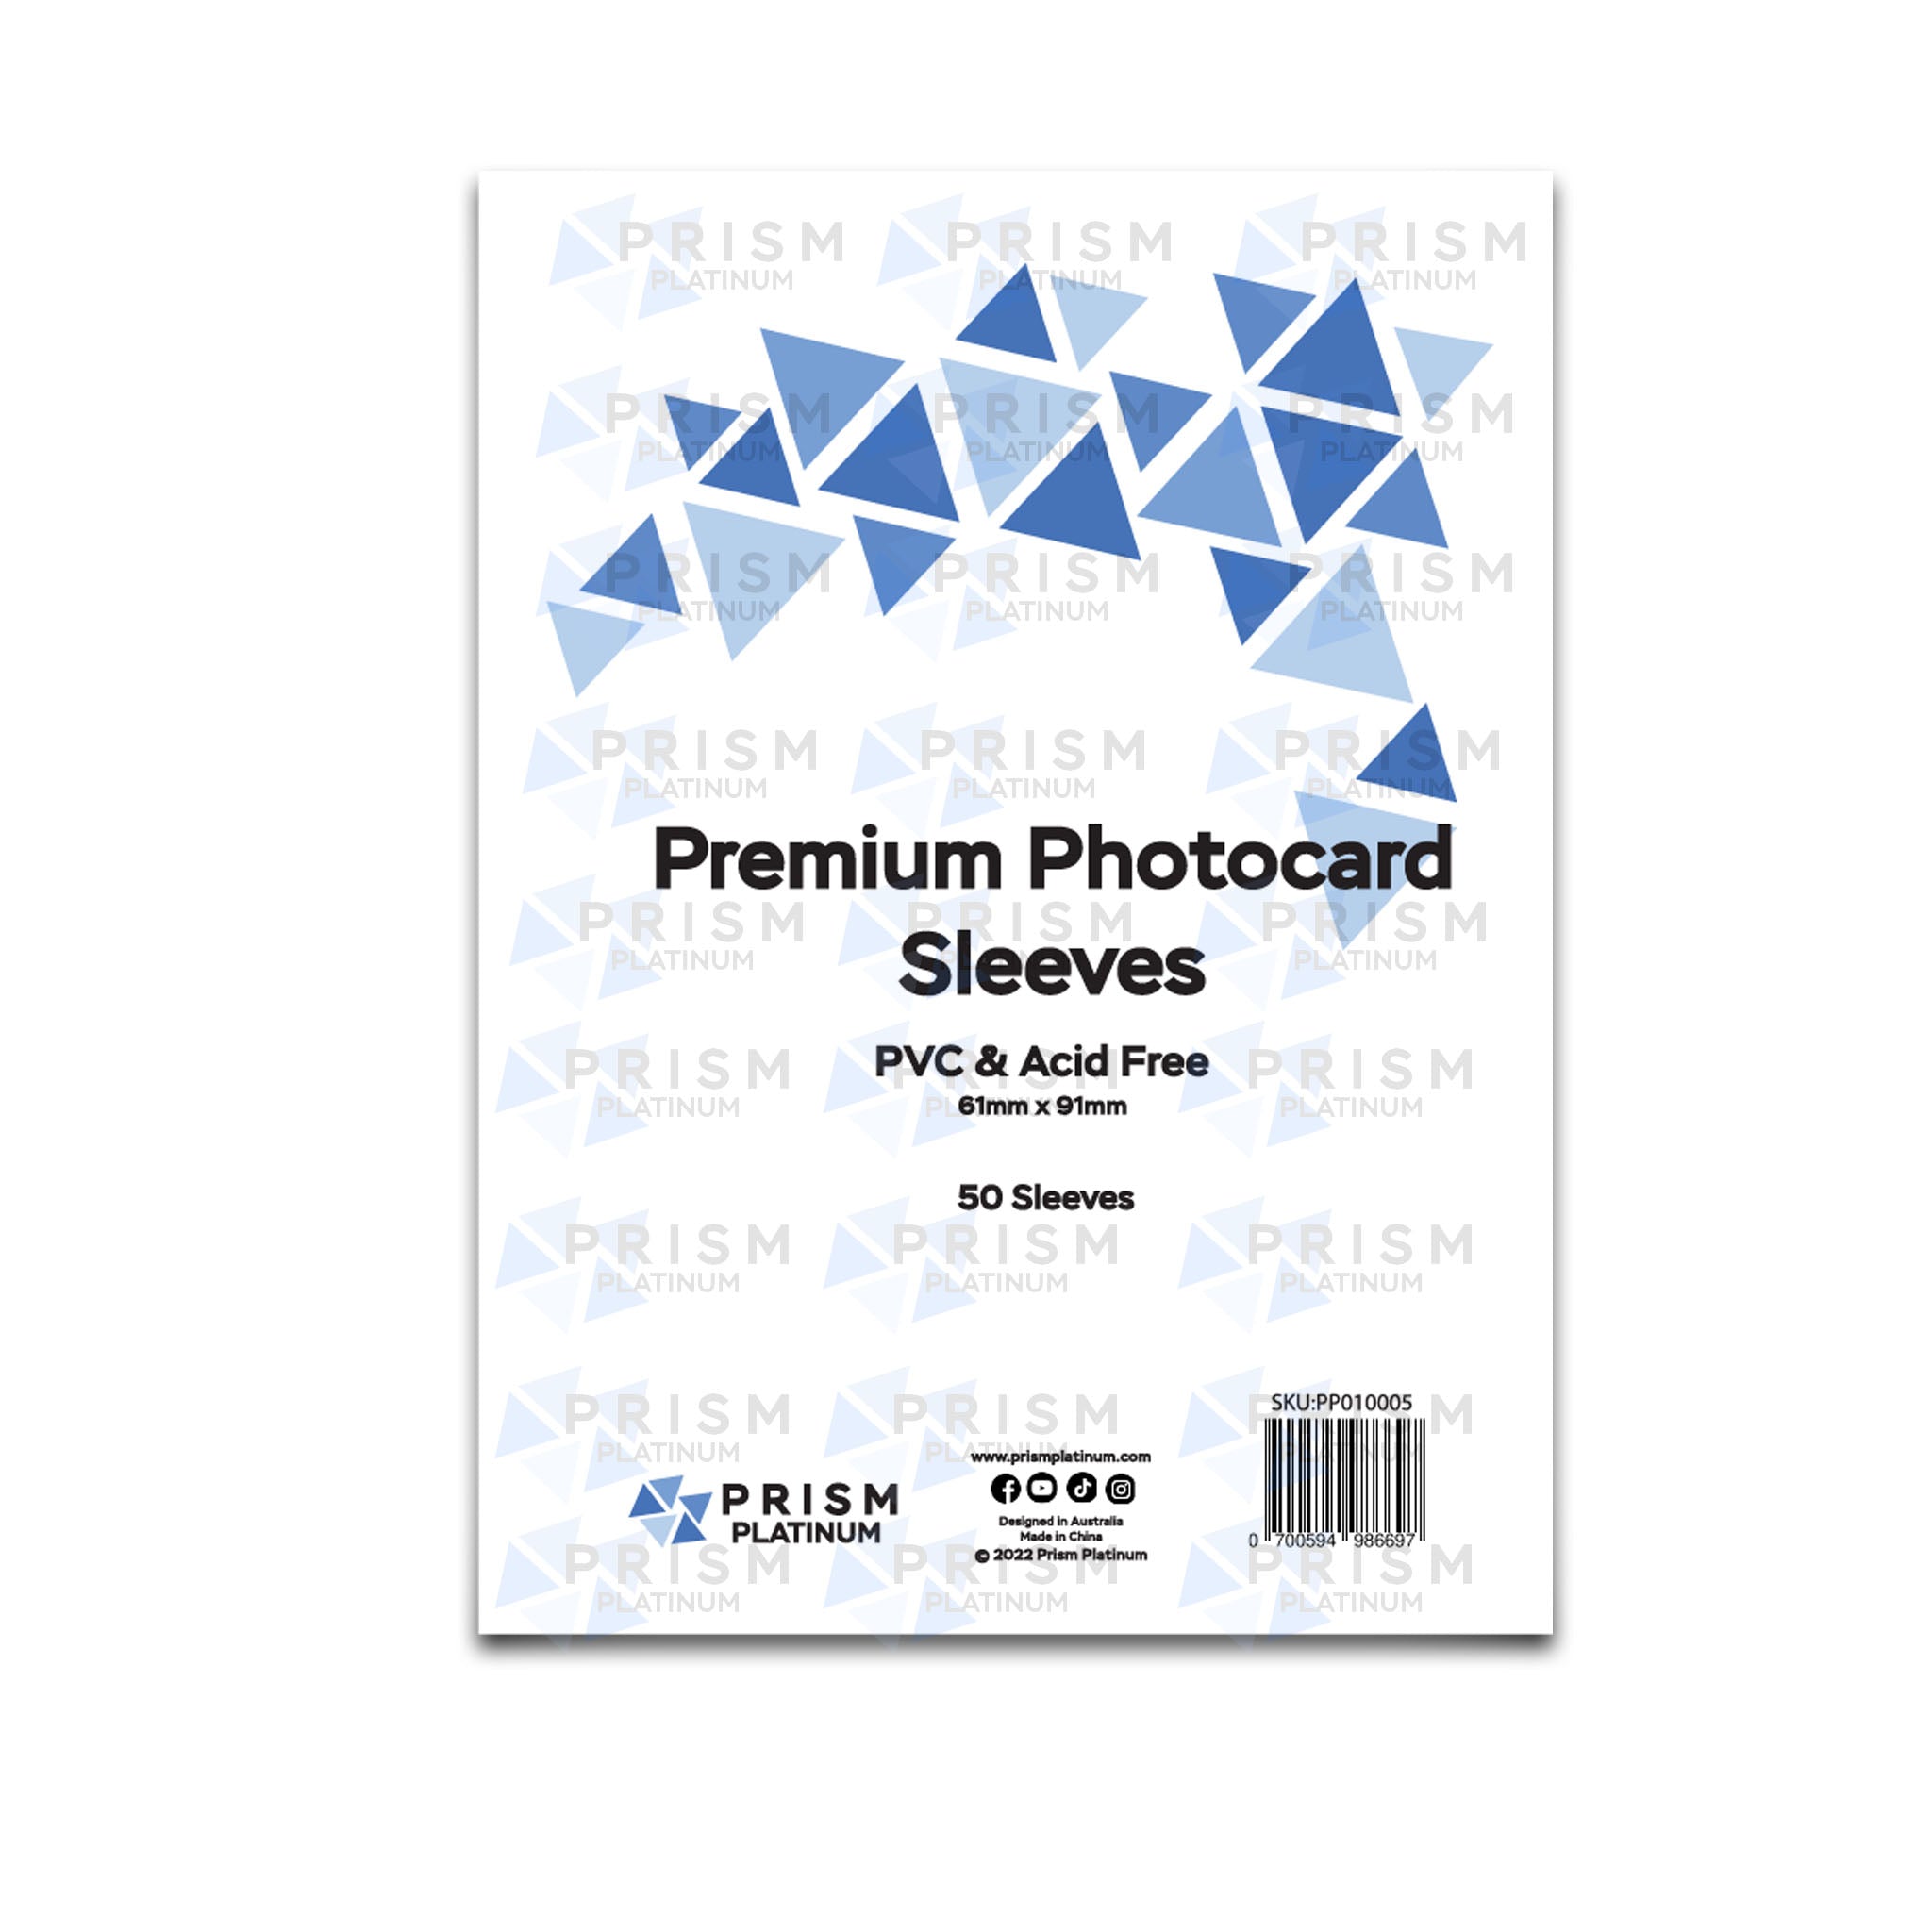 Premium Clear Photocard Toploader - Large Size - Prism Platinum